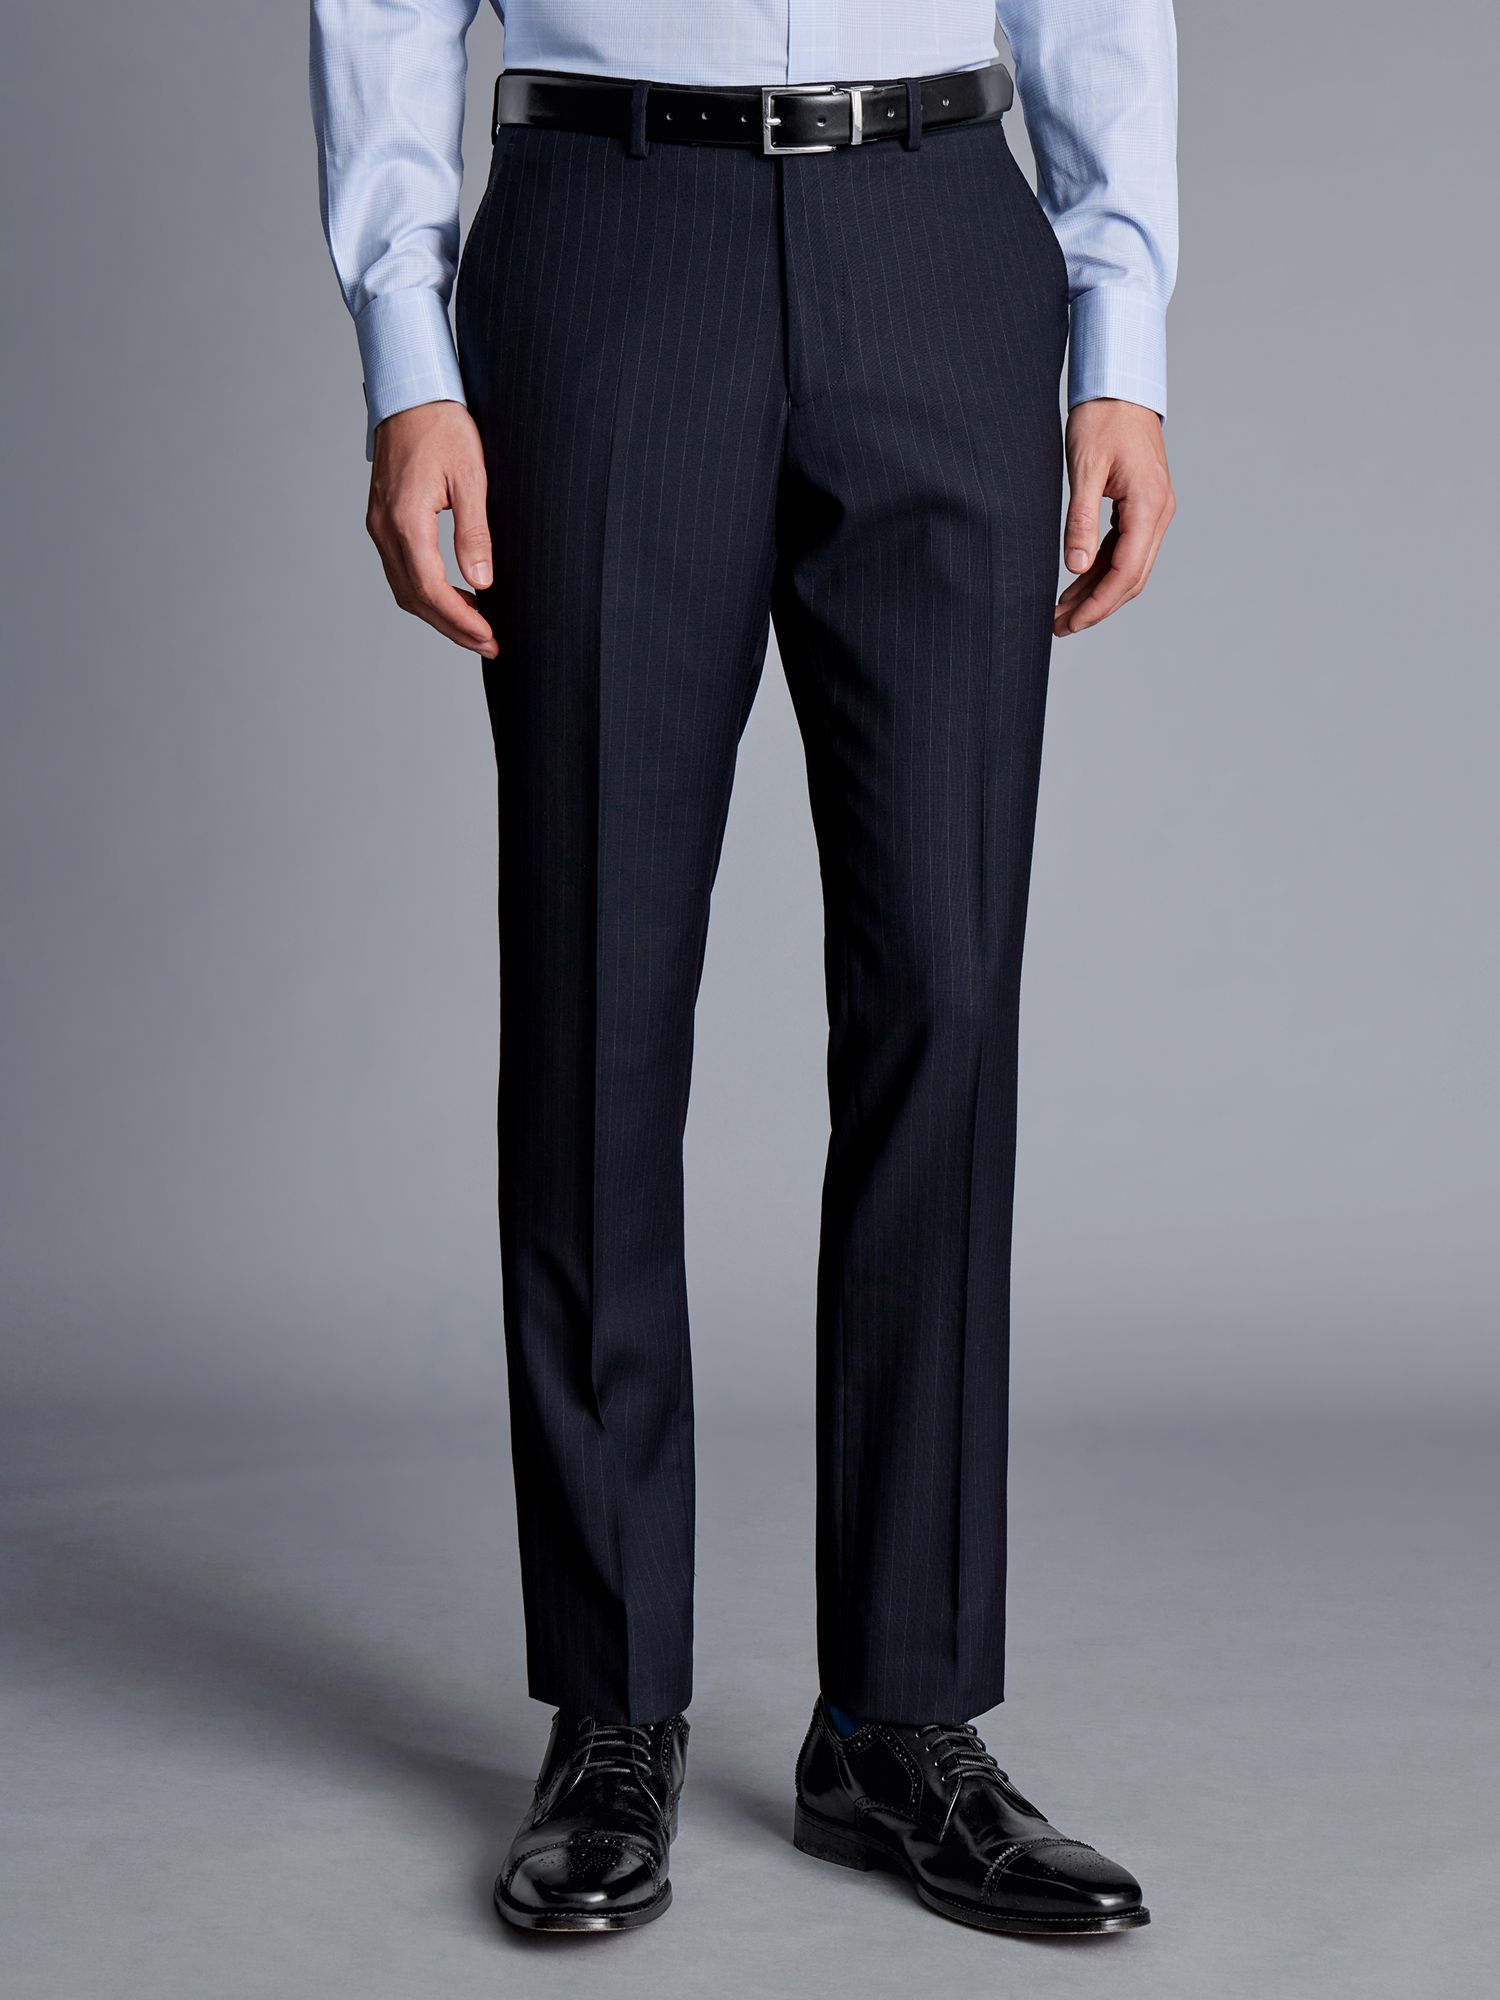 Charles Tyrwhitt Stripe Slim Fit Ultimate Performance Suit Trousers, Navy